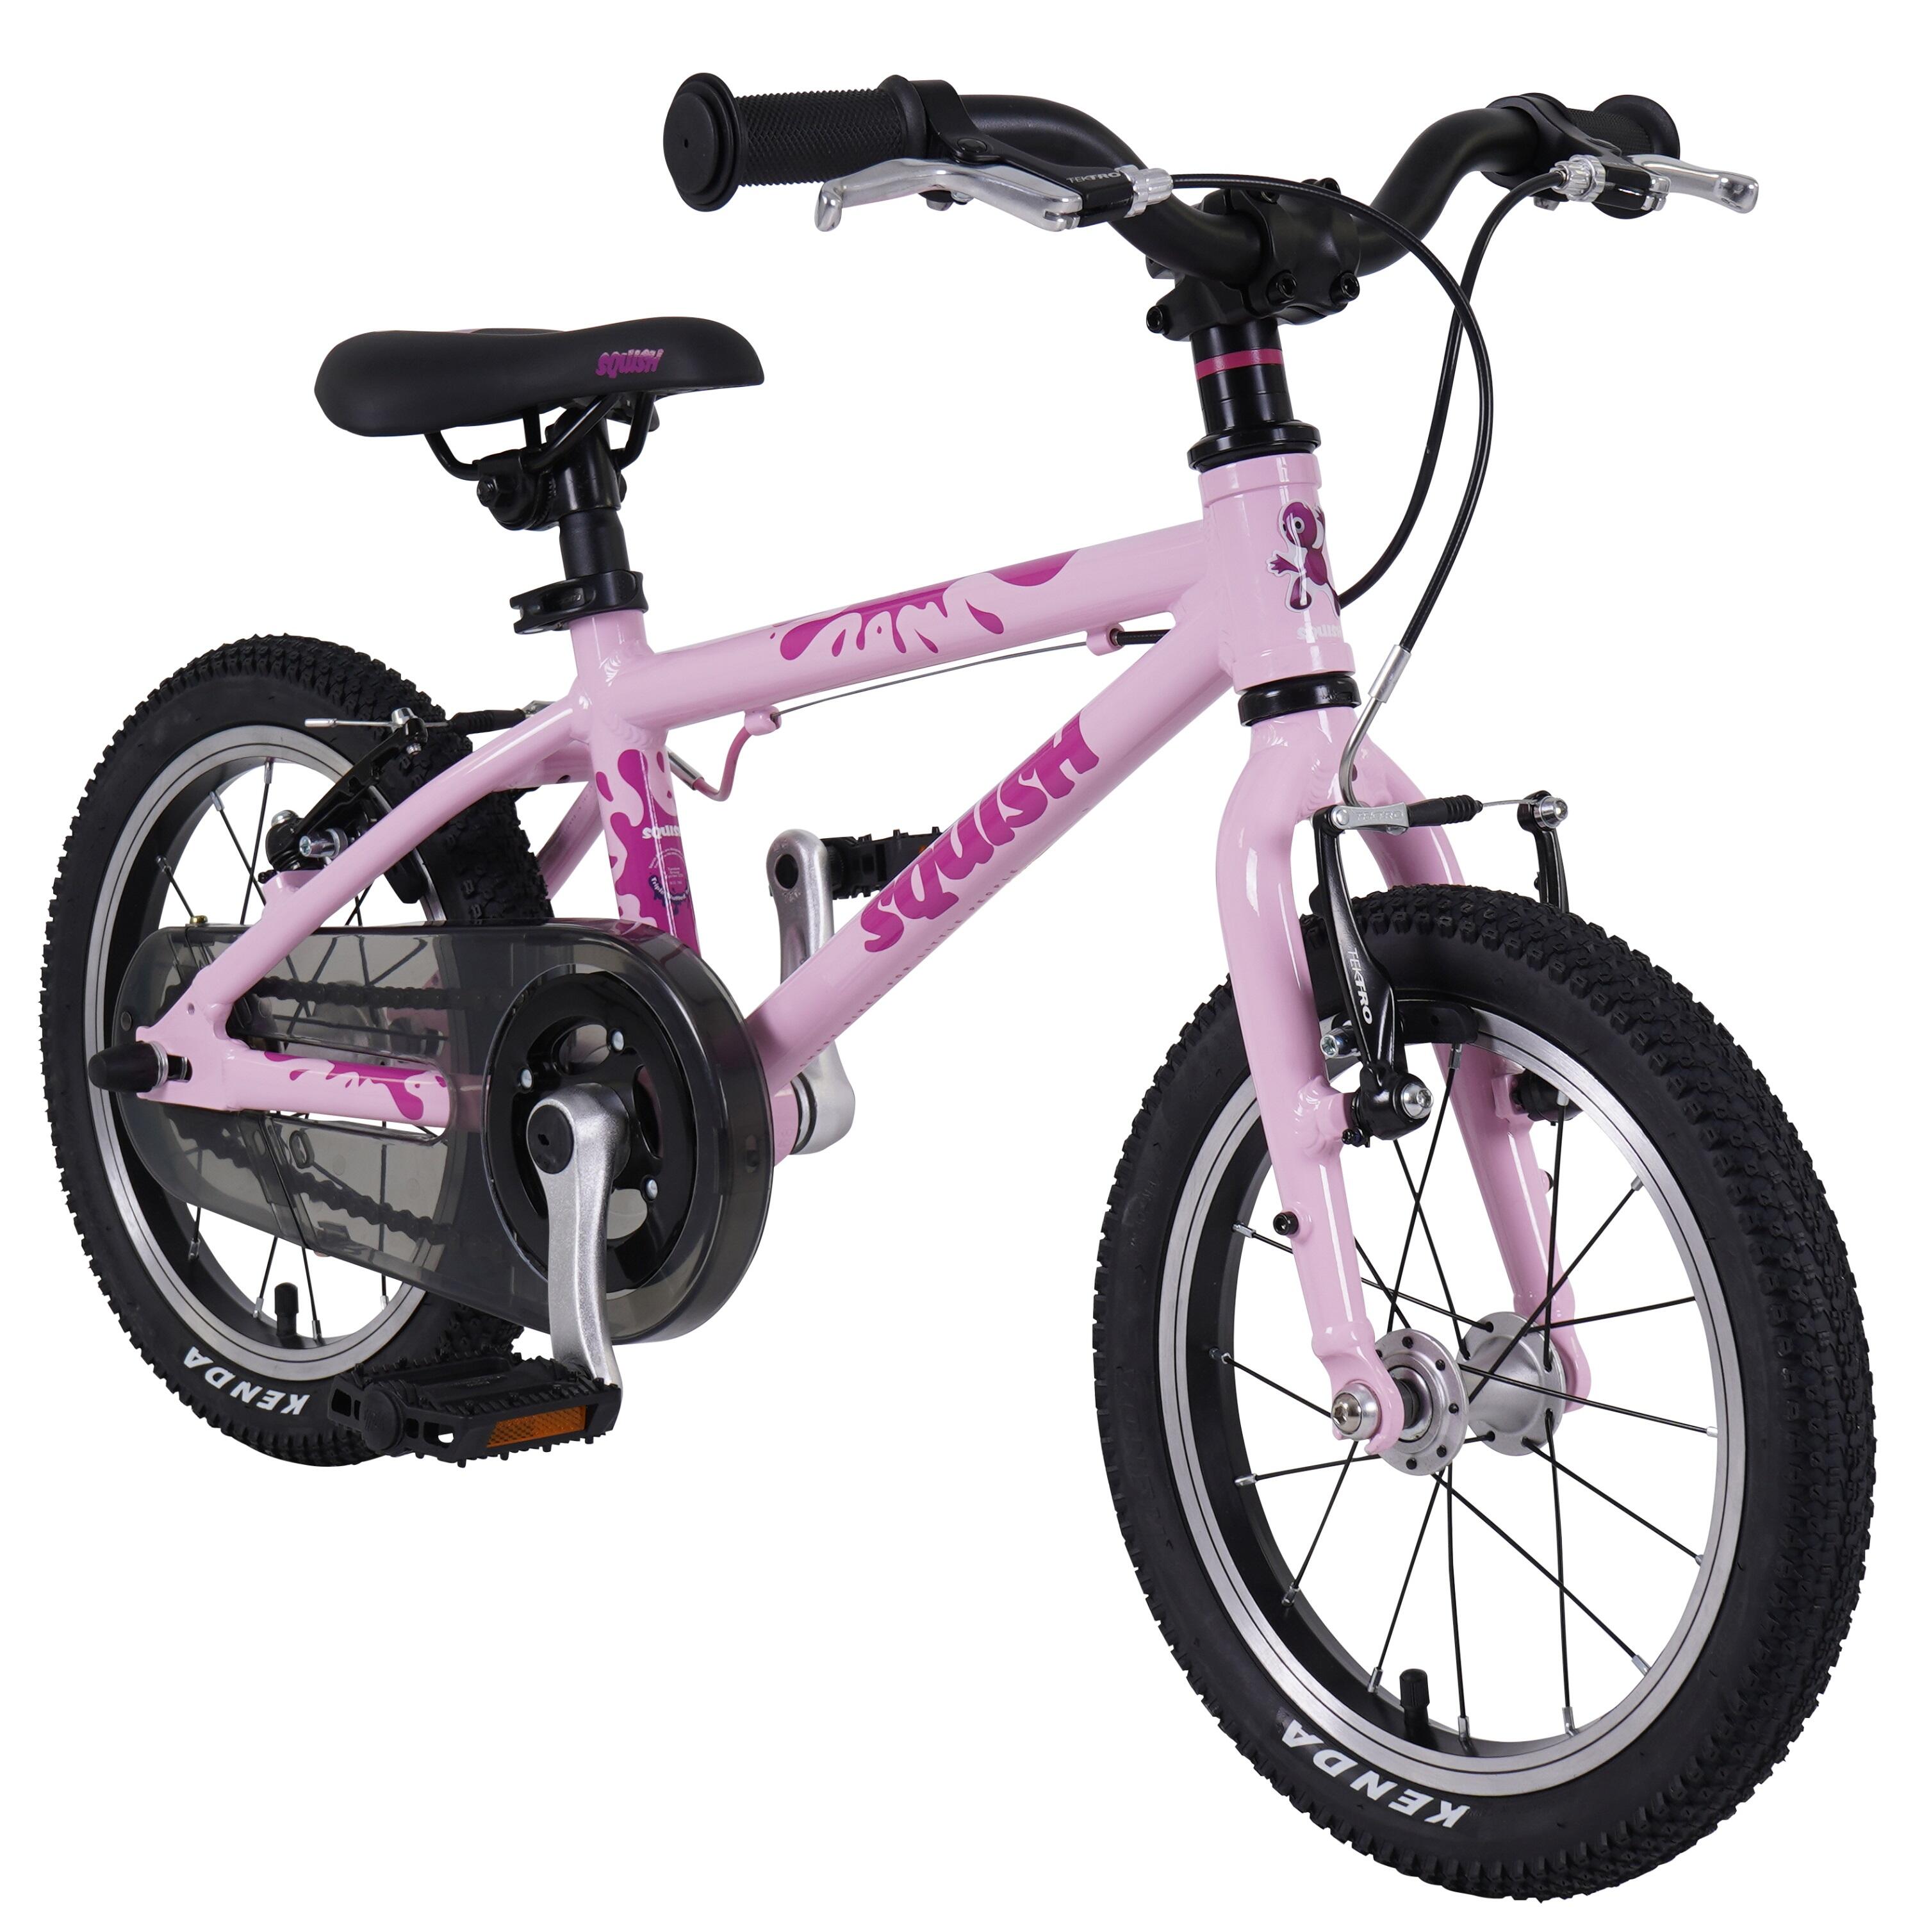 14" Wheel Lightweight Hybrid Bike Pink 1/8